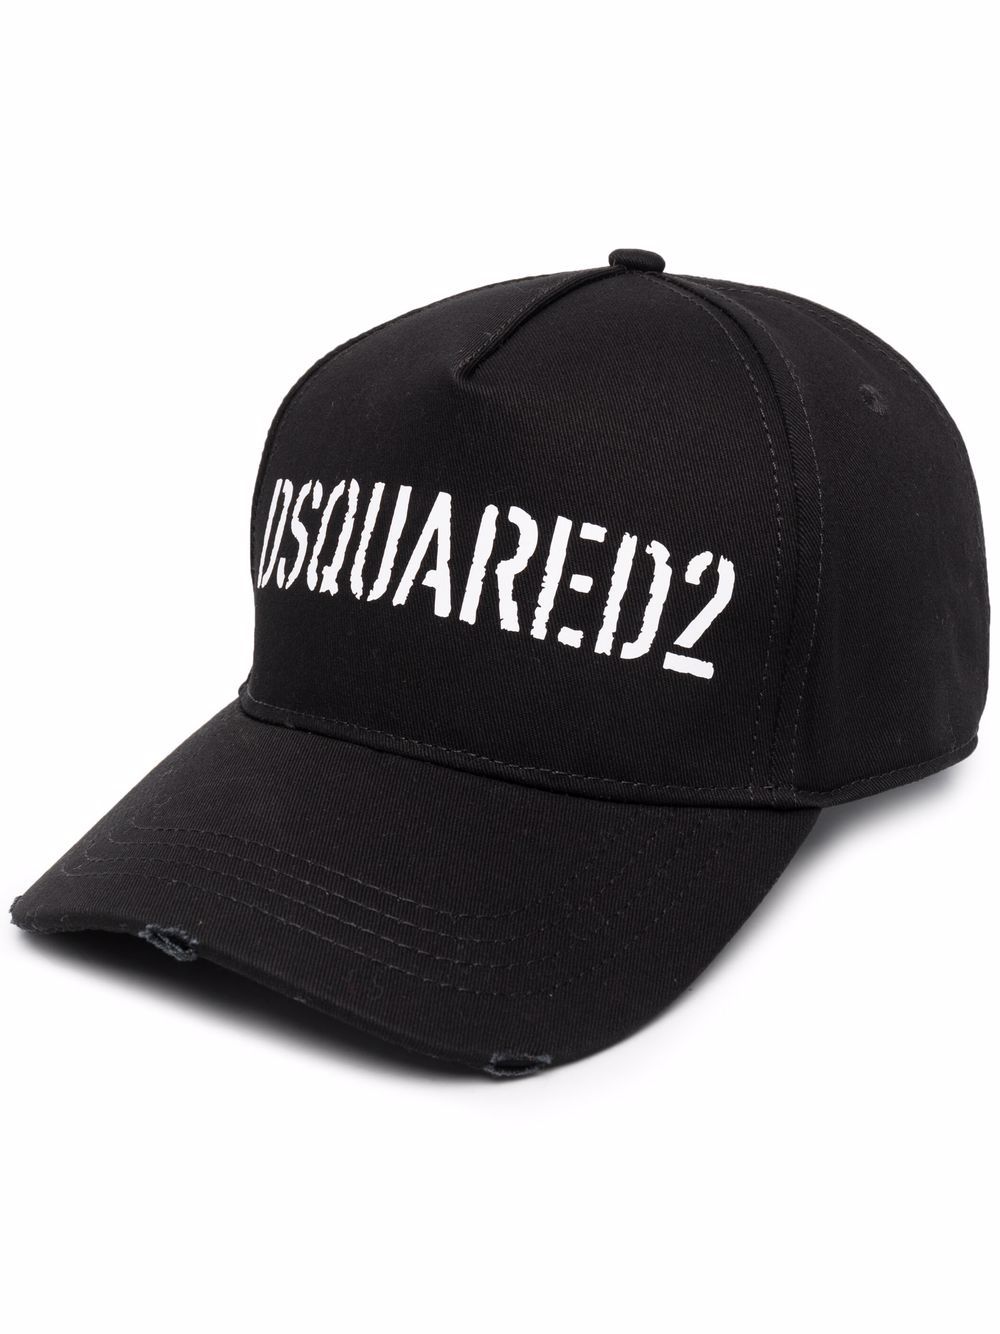 Dsquared2 embroidered logo cap - Black von Dsquared2